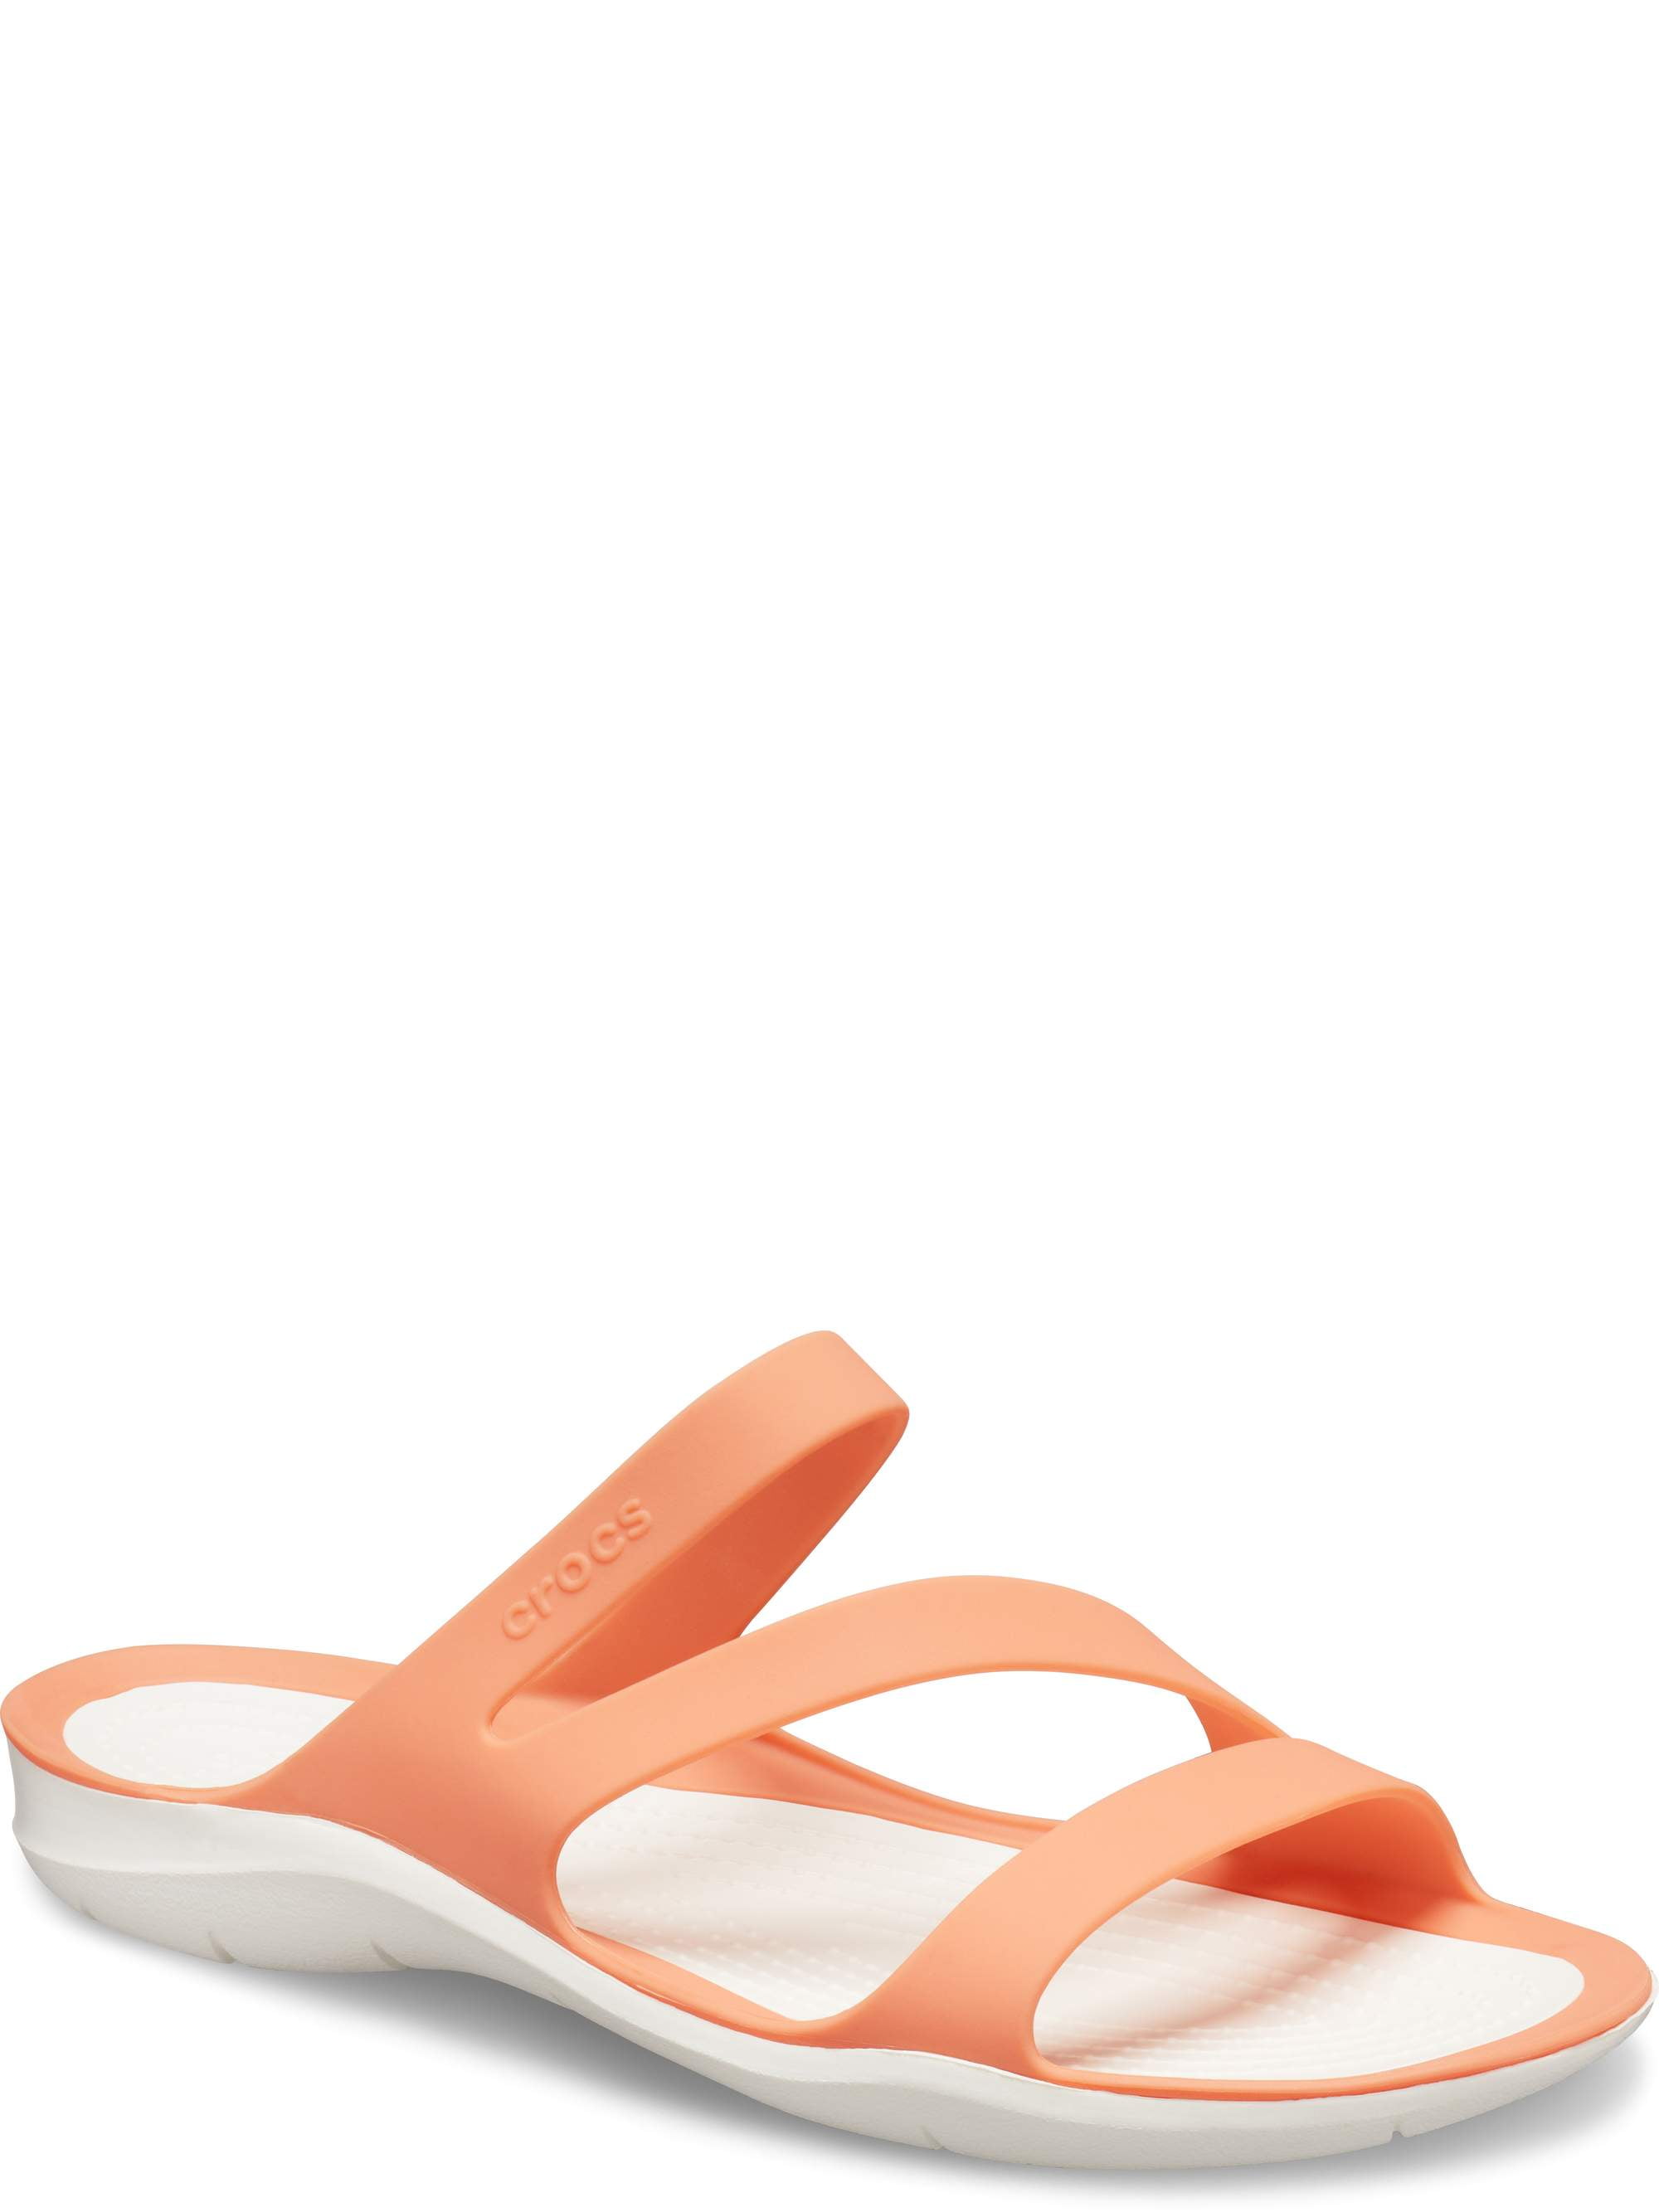 Lightweight & Flexible Crocs Women's Swiftwater Sandal Iconic Crocs Comfort 